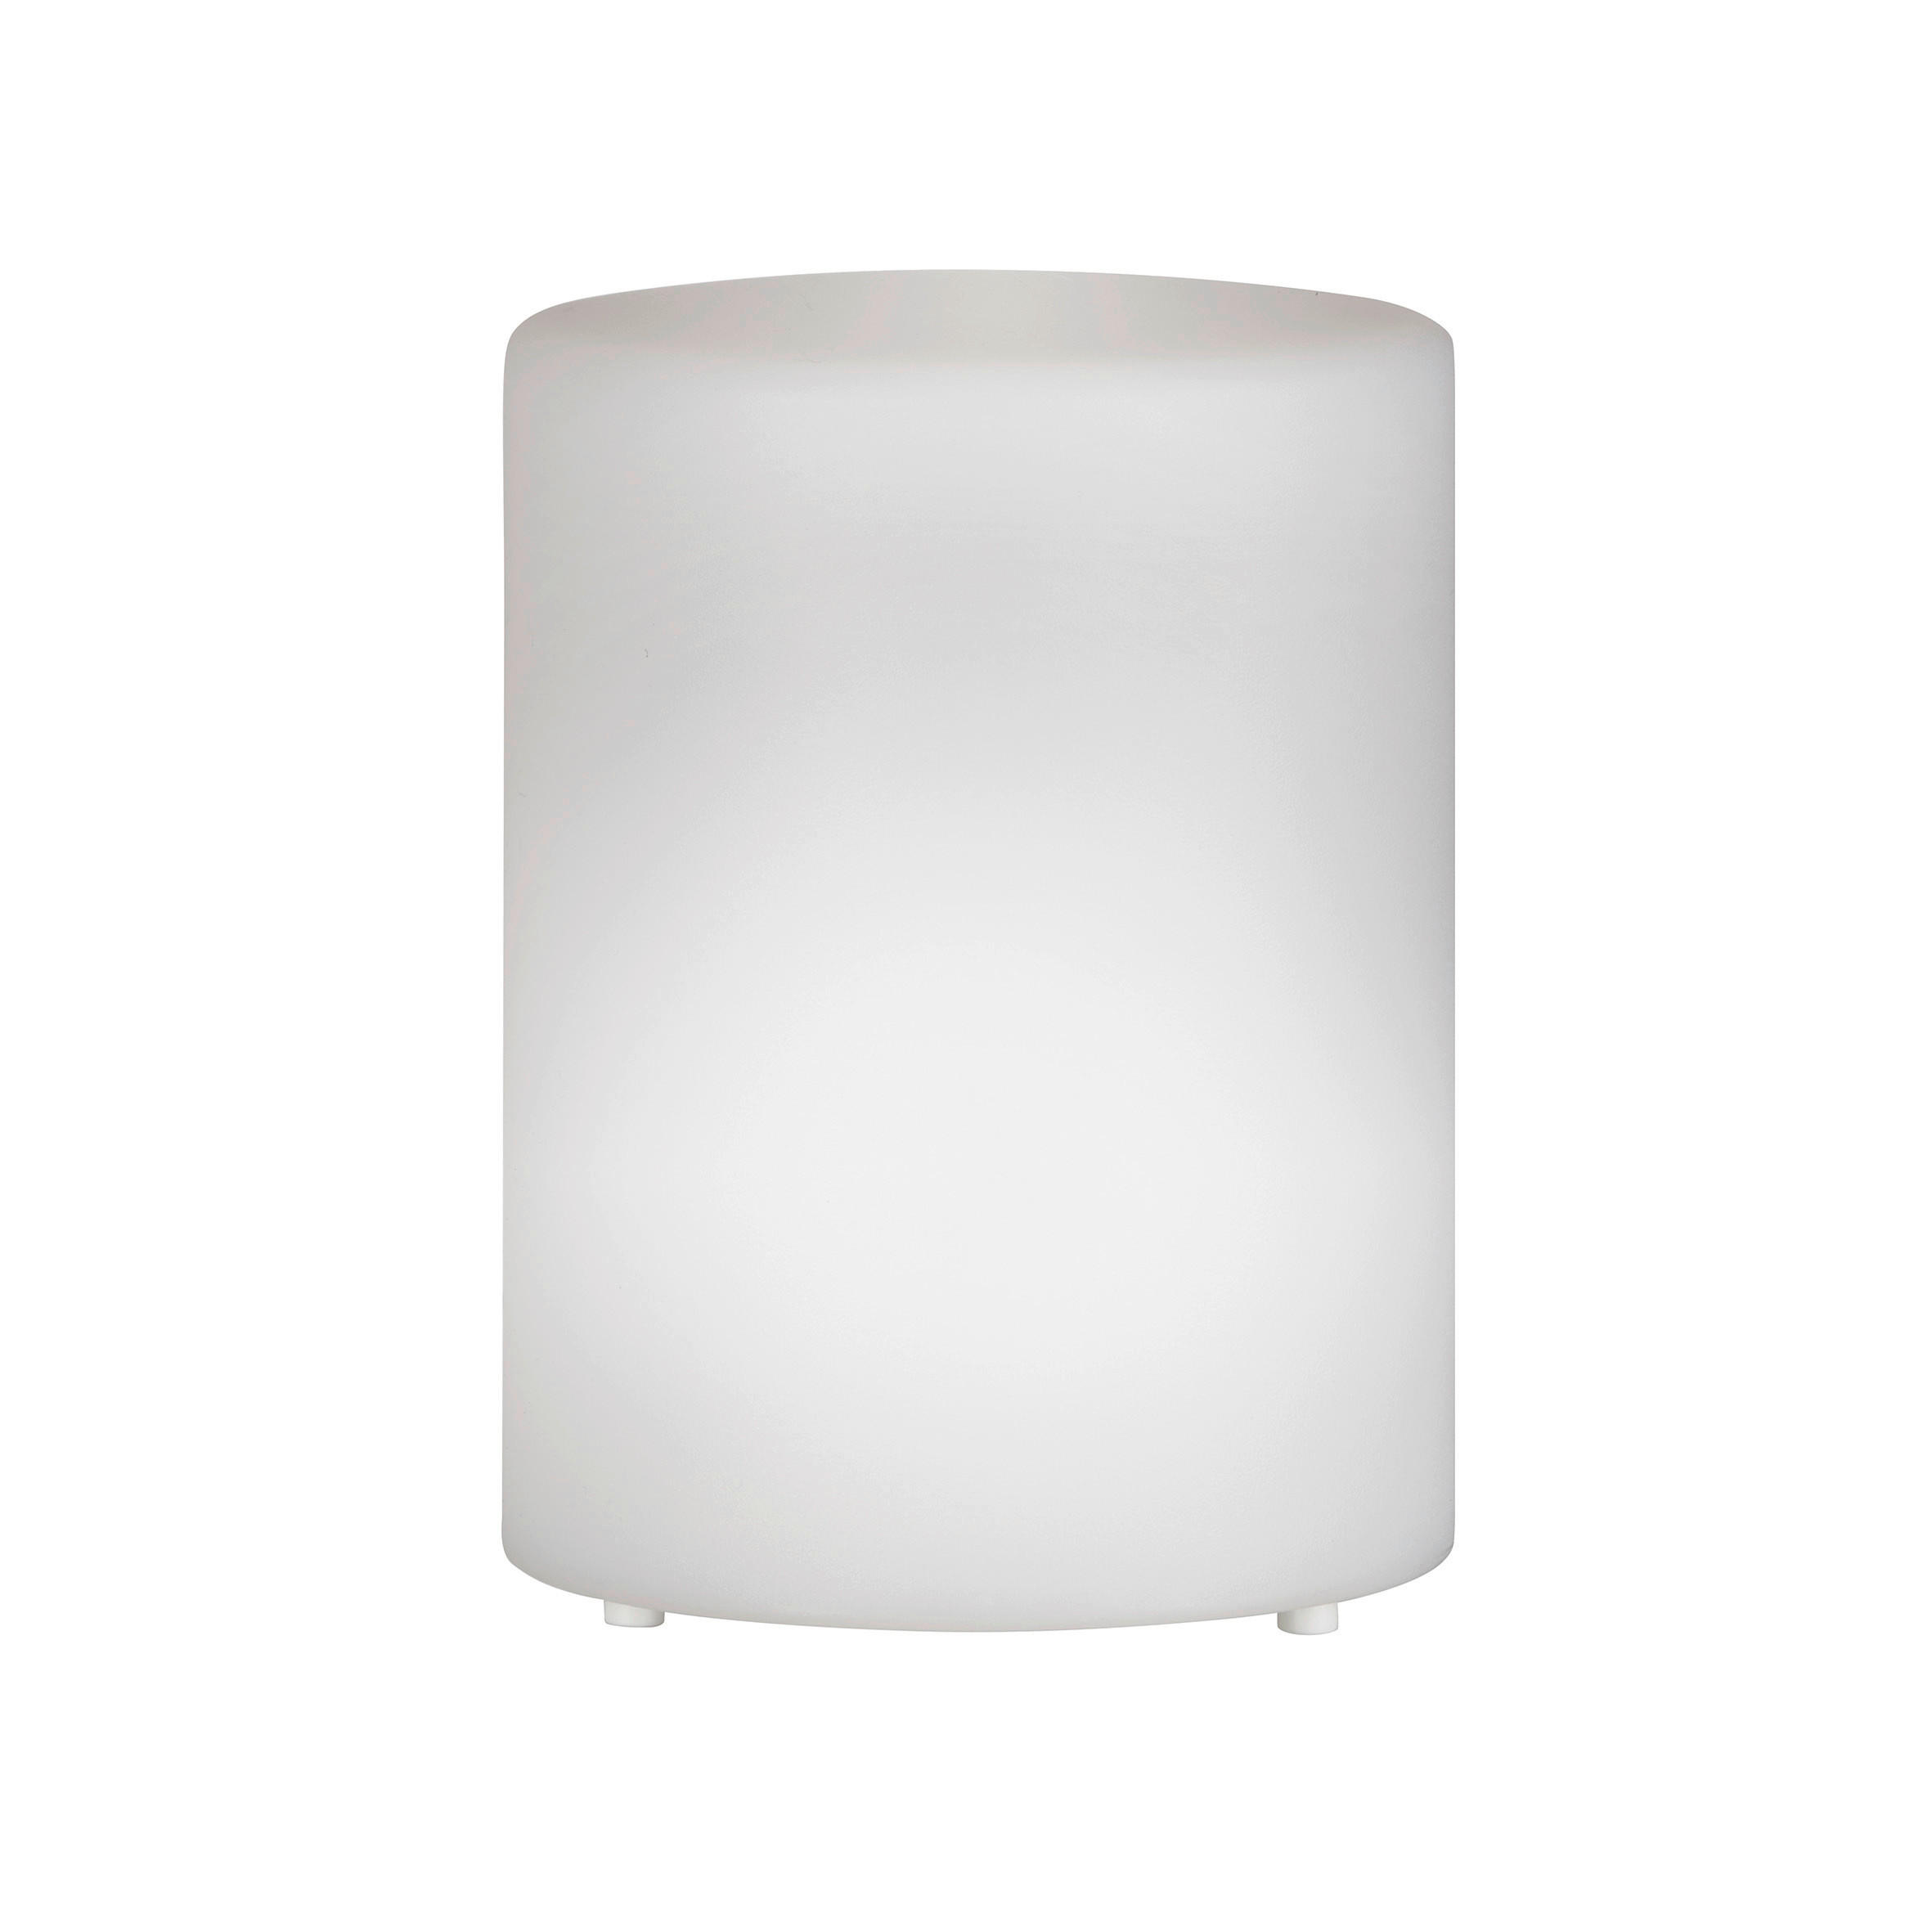 LED-TISCHLEUCHTE Ceppo 11/15 cm   - Weiß, Basics, Kunststoff (11/15cm)